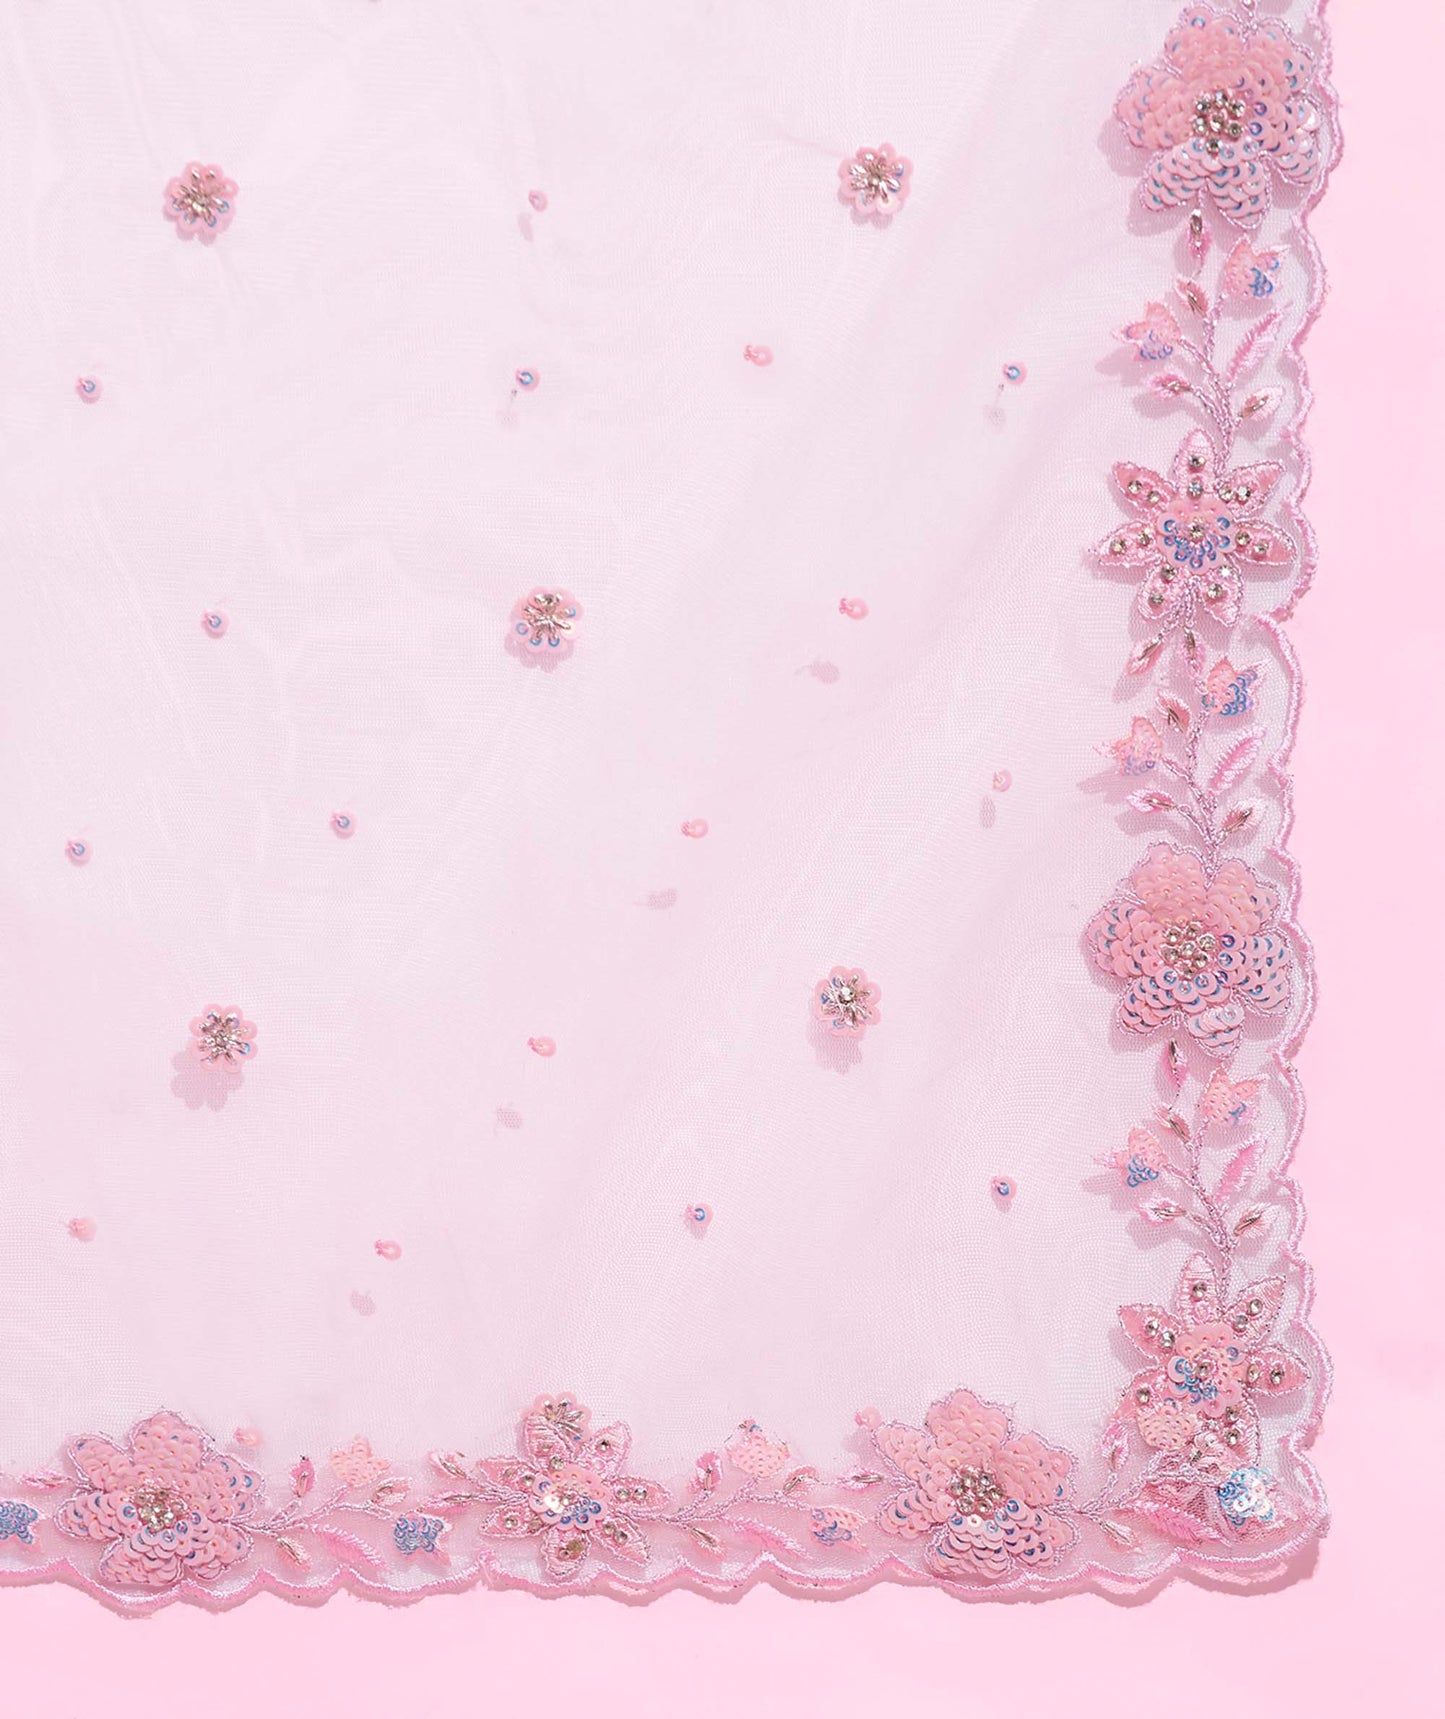 Pink Color Net Sequins Work Lehenga